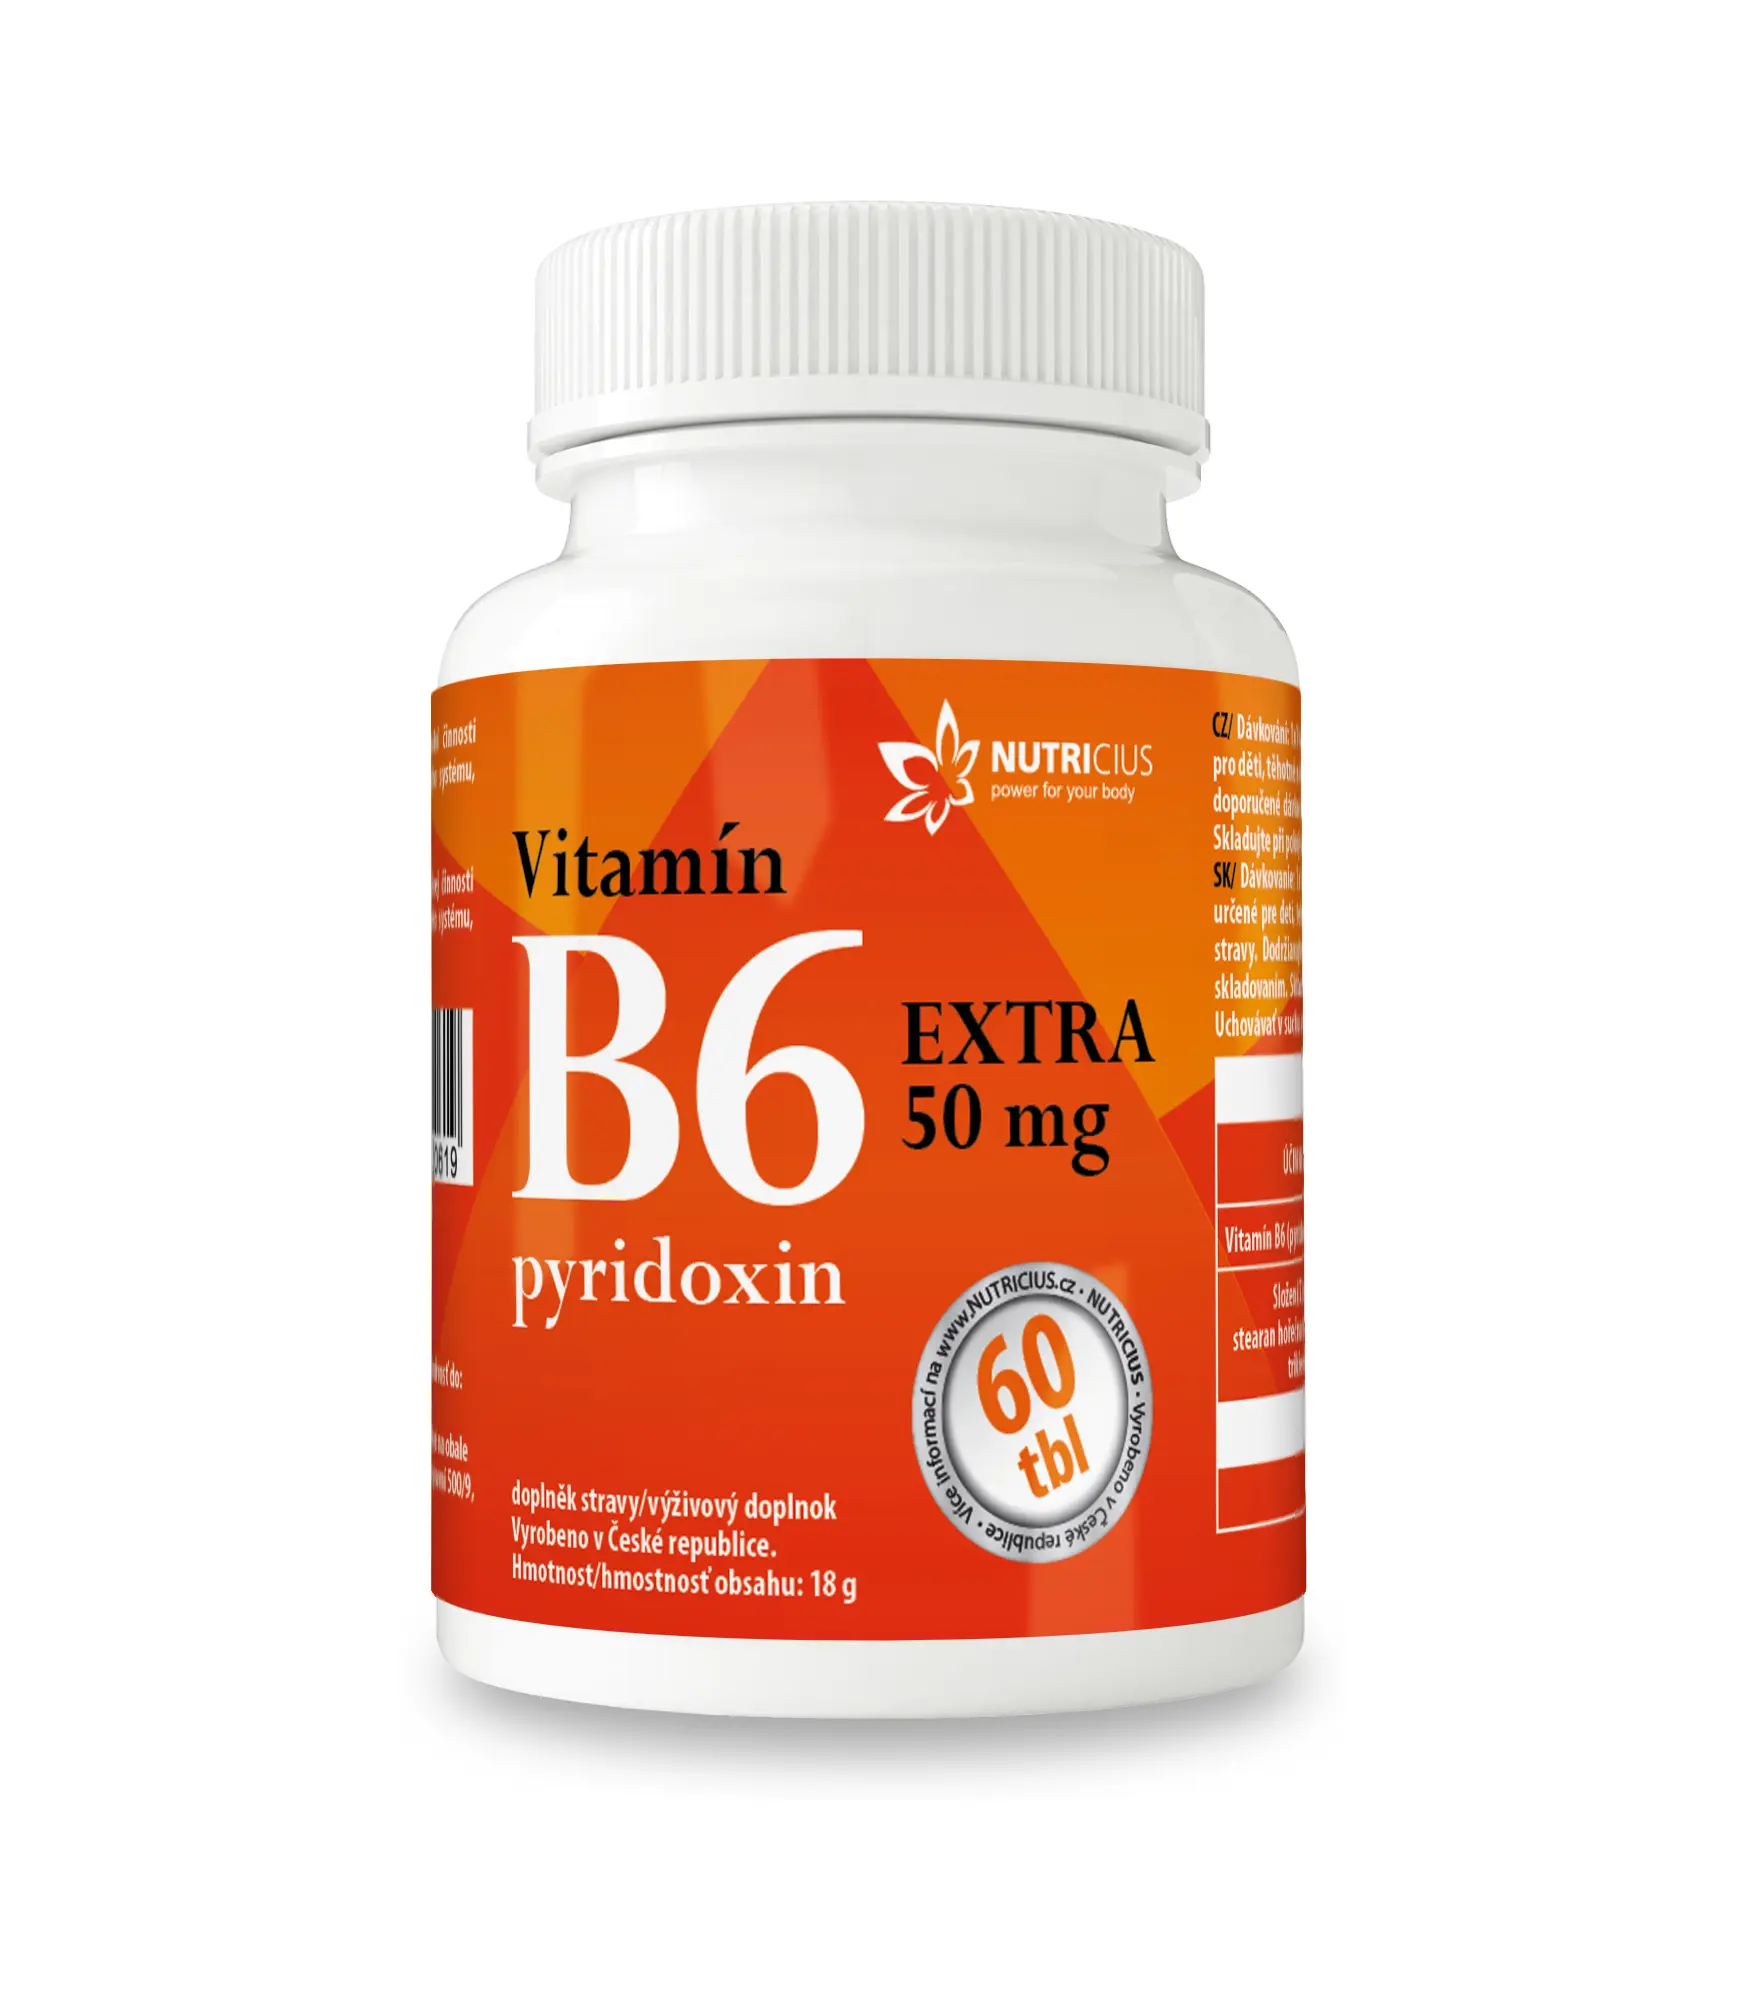 Nutricius Vitamín B6 EXTRA pyridoxin 50 mg 60 tablet